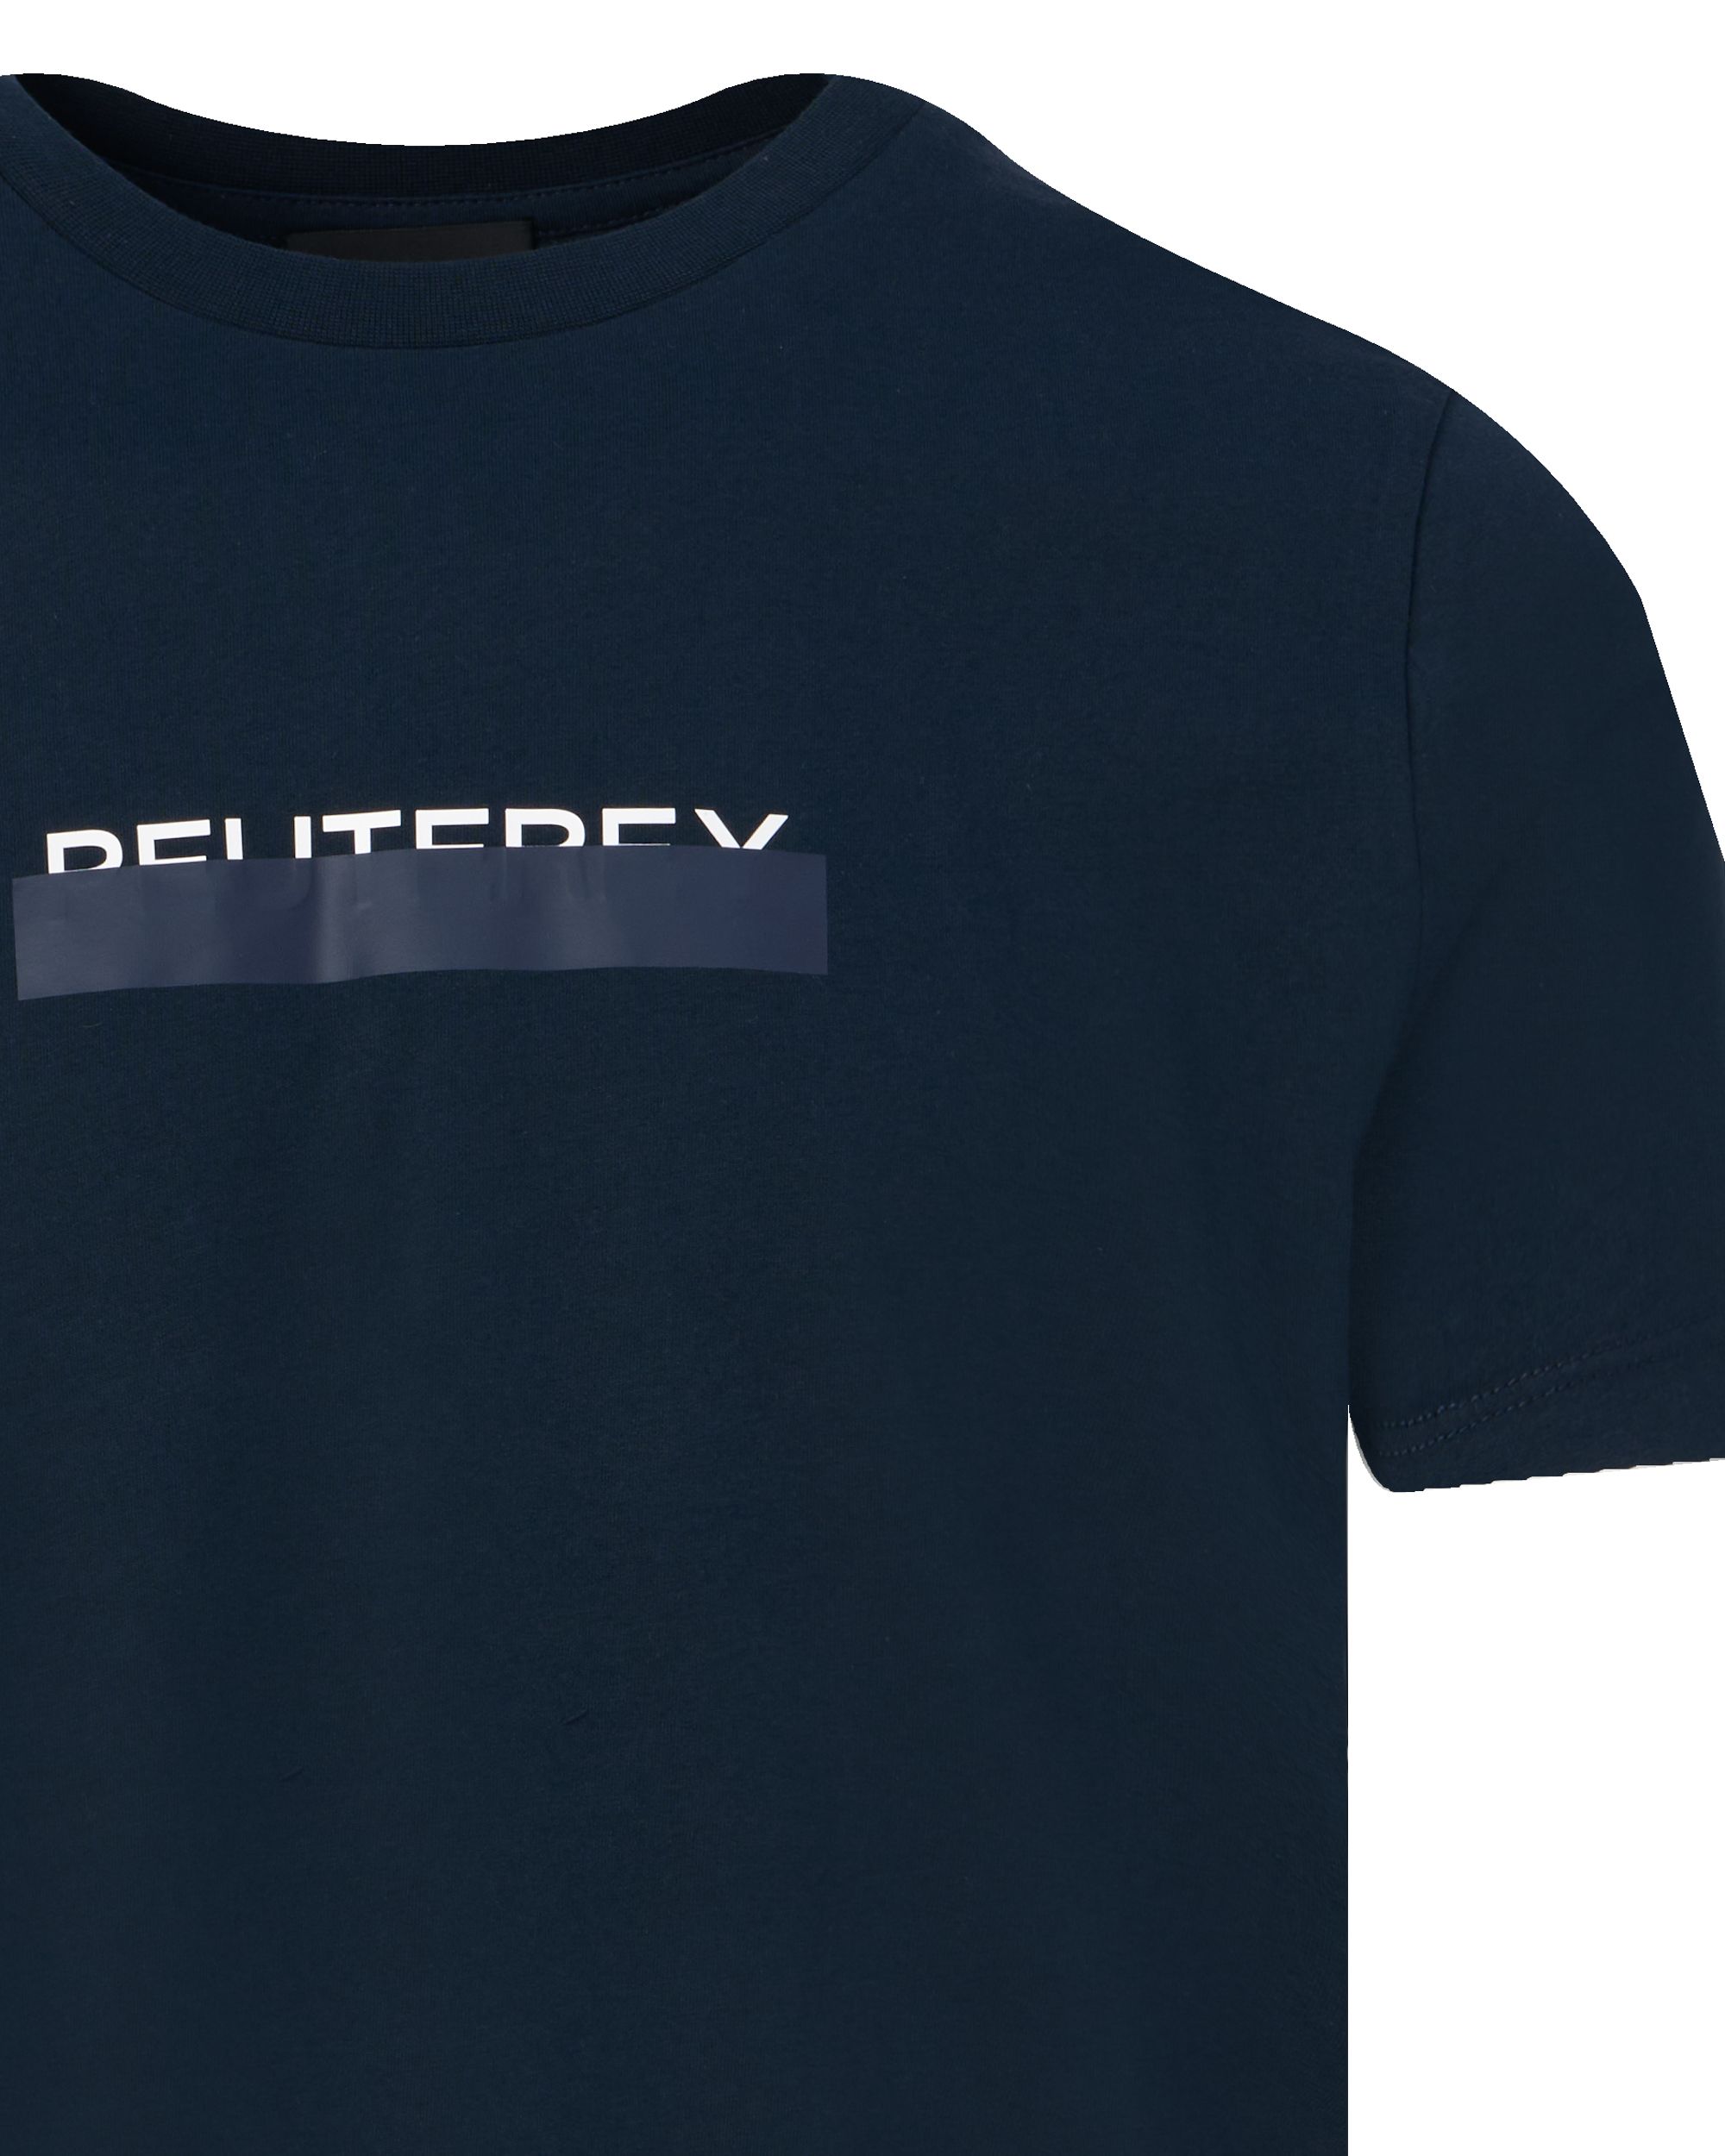 Peuterey Manderly T-shirt KM Donker blauw 094274-001-L